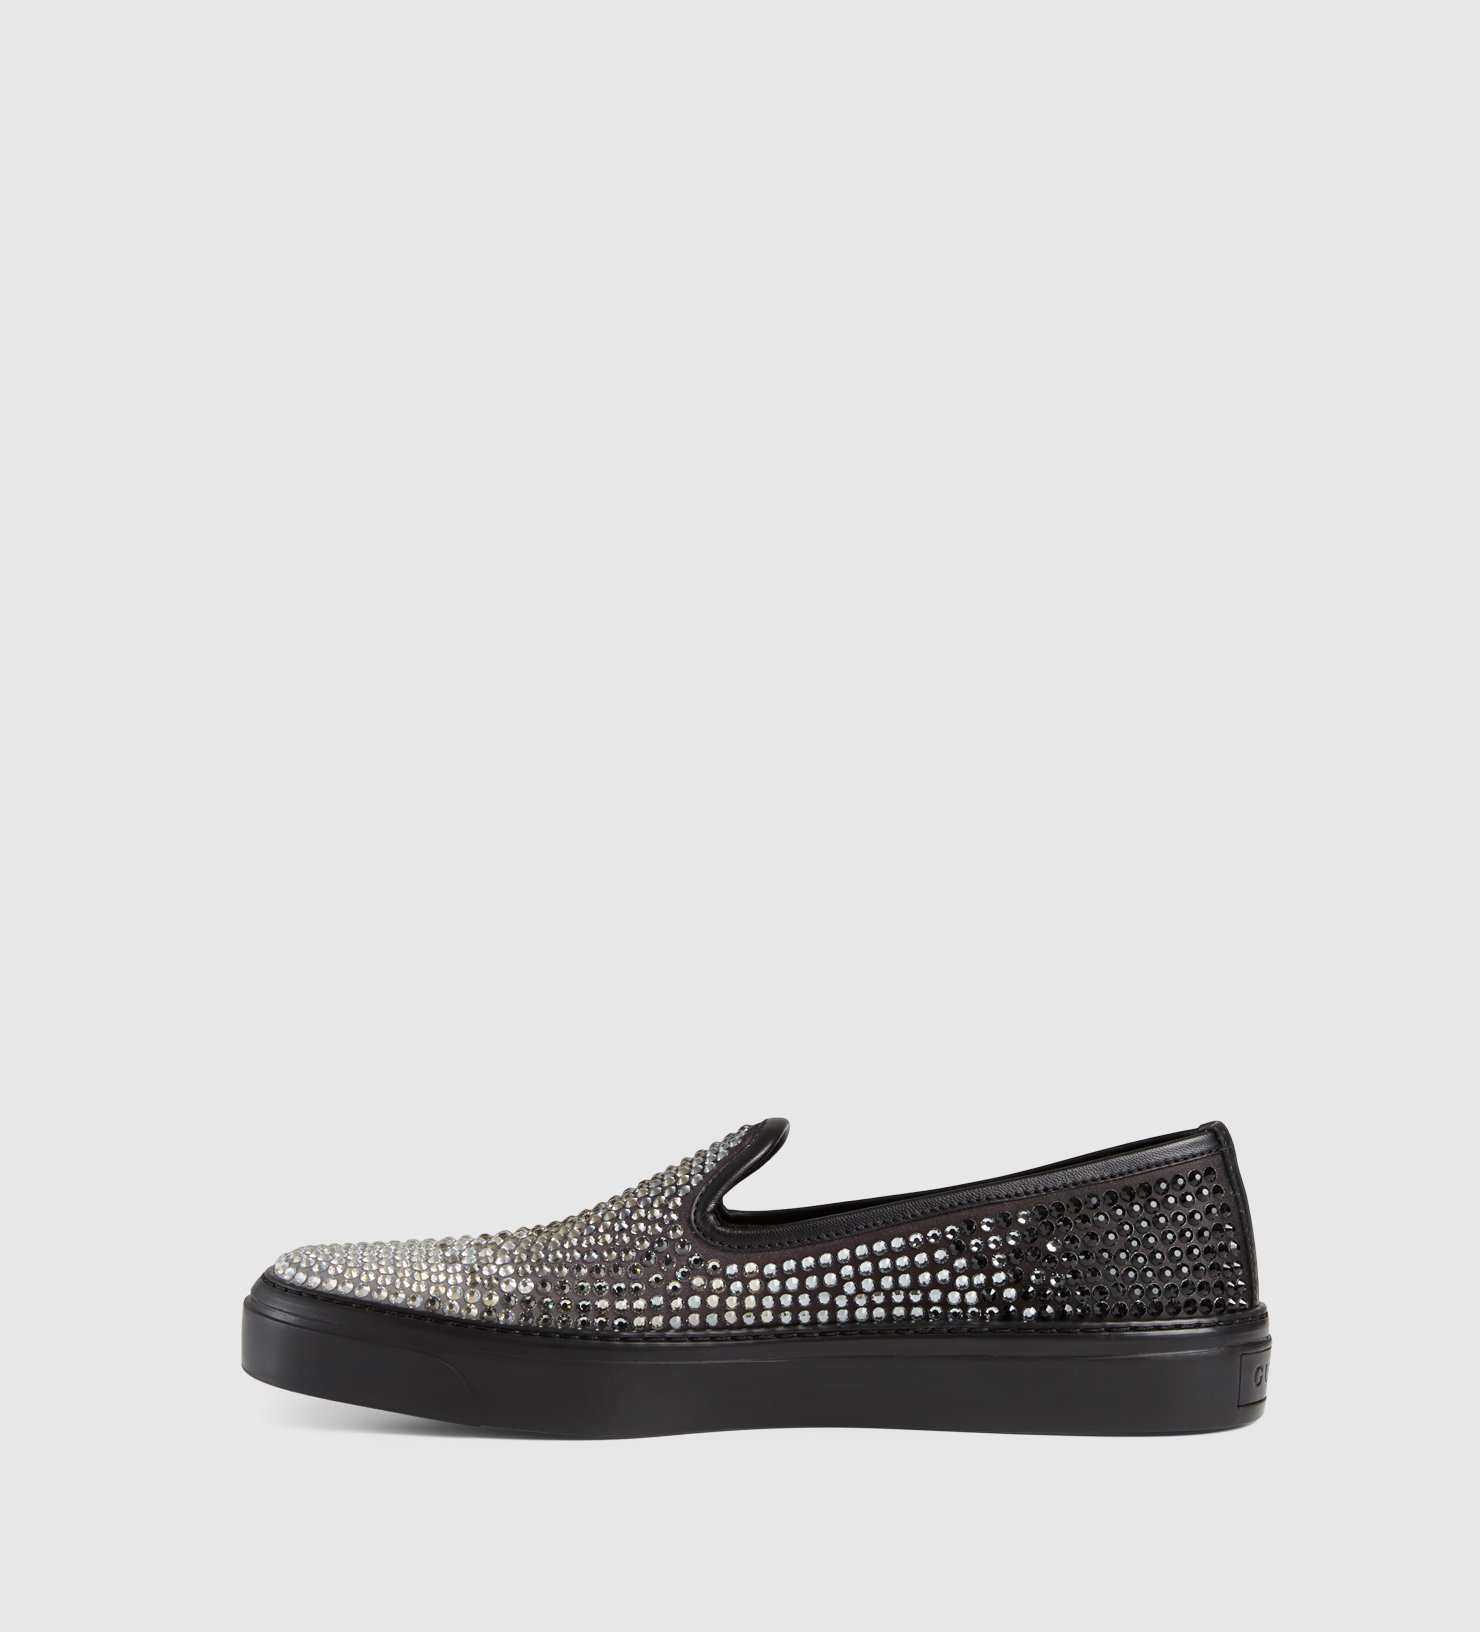 Gucci Crystal Satin Slip-on Sneaker in Black | Lyst